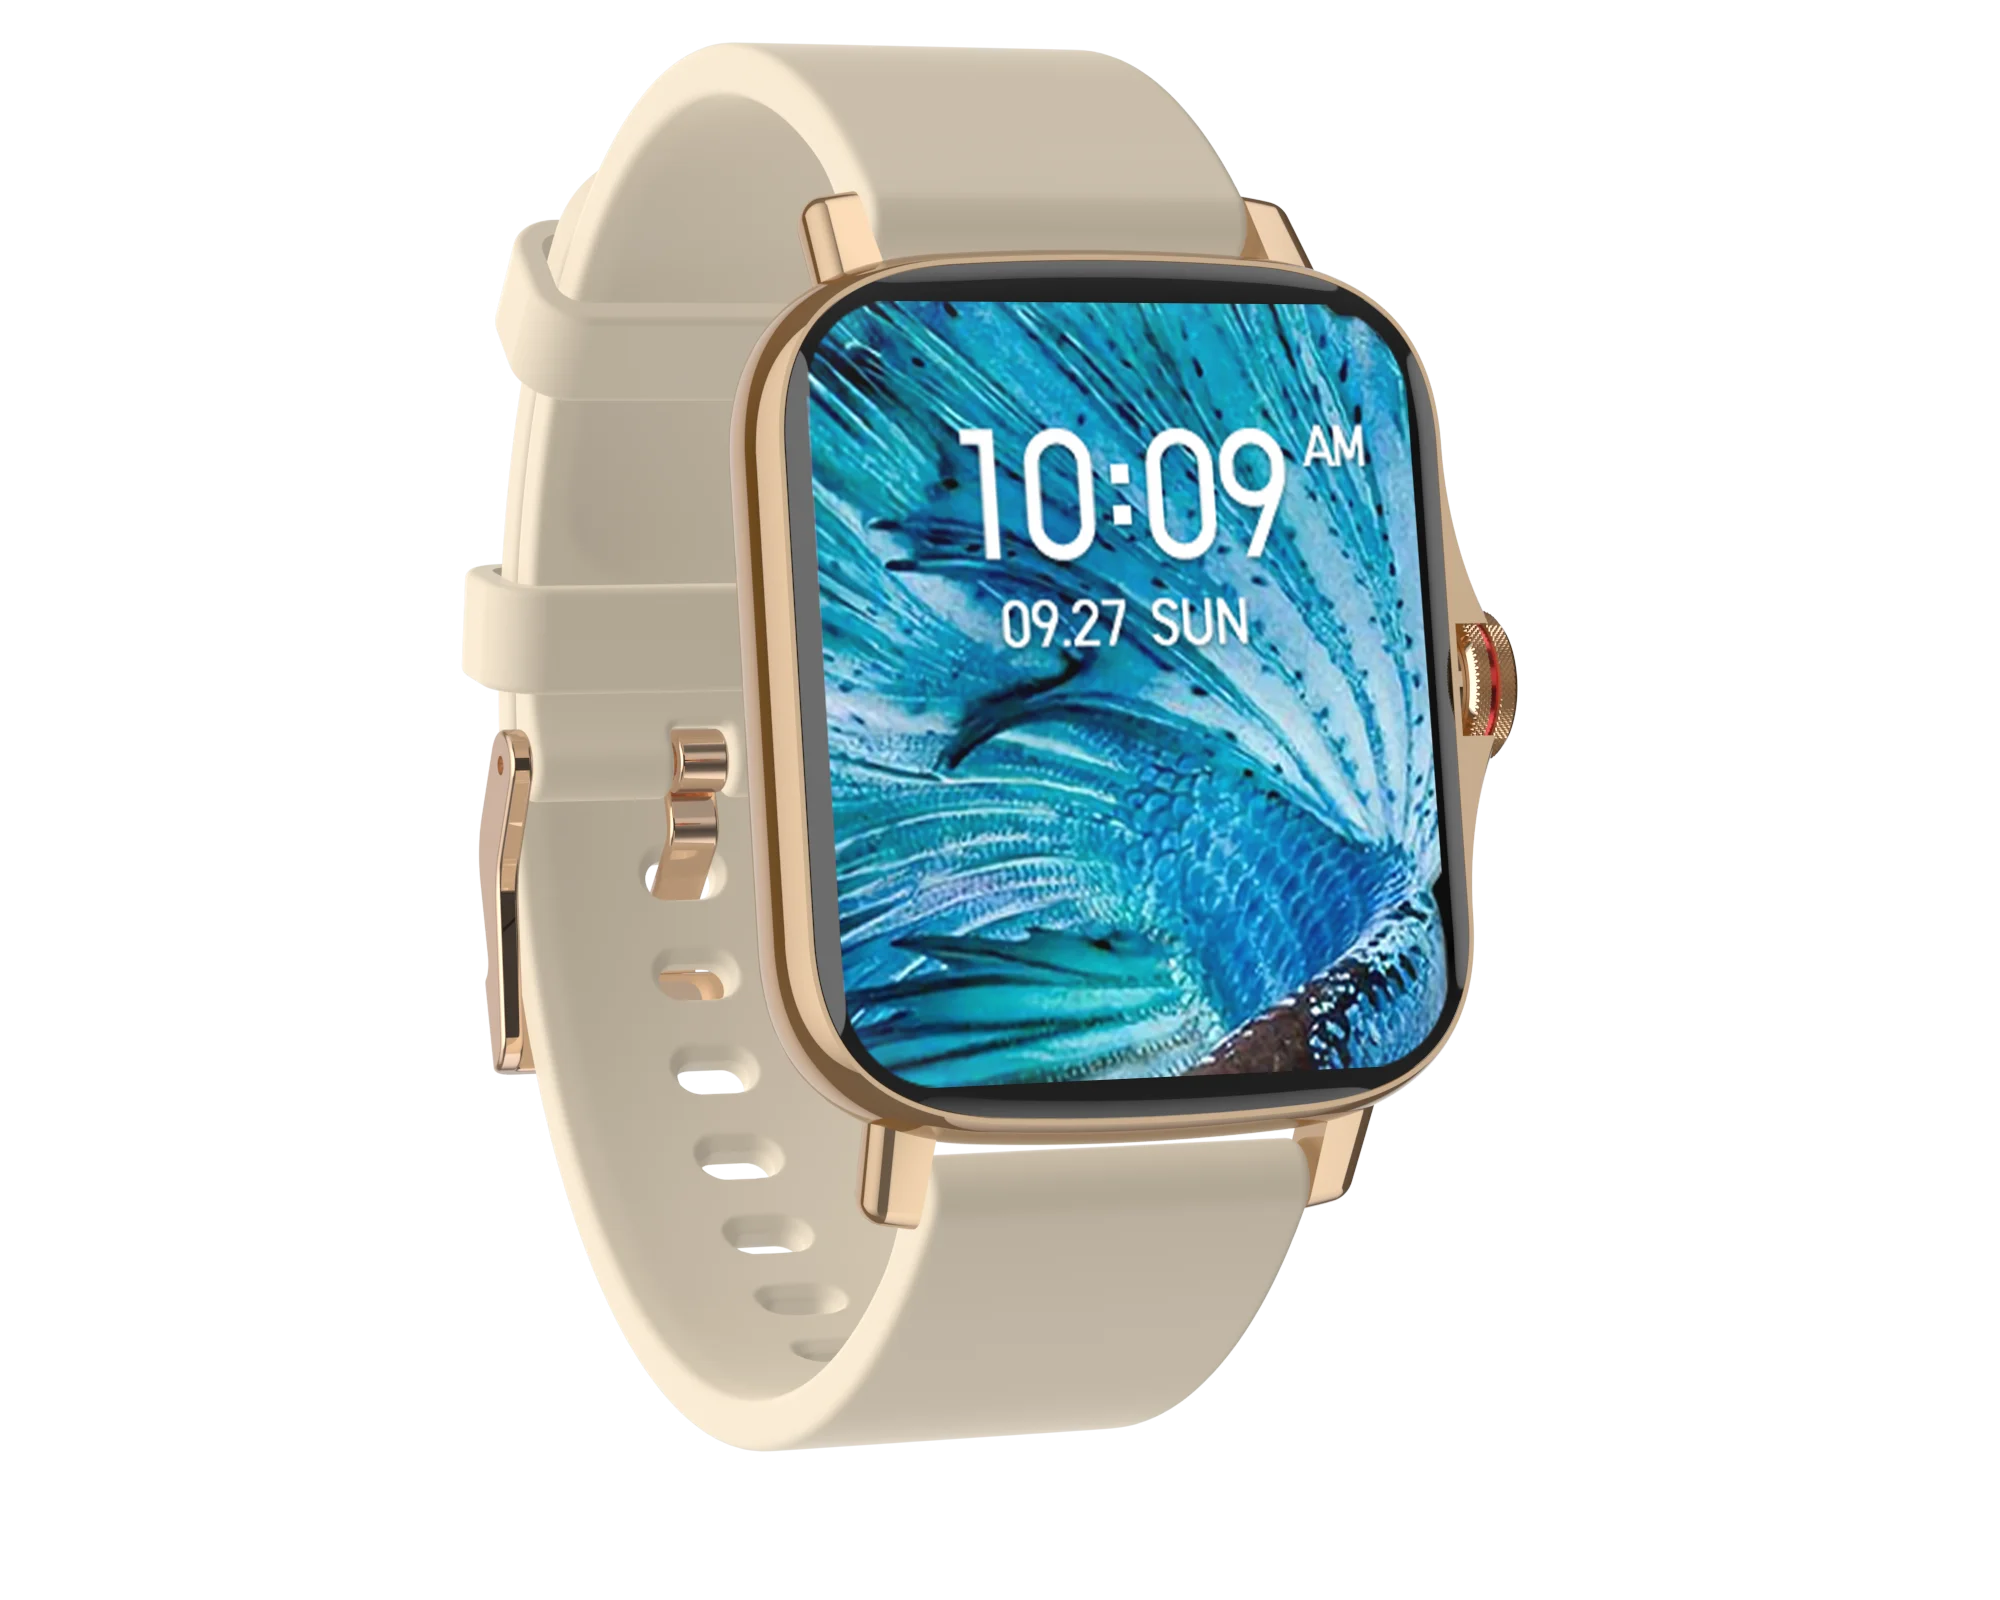 

1.69 Full Touch Screen Smart Watch FM08 BT Call Custom Dial ECG Heart Rate Blood pressure oxygen Fitness Tracker fm08 Smartwatch